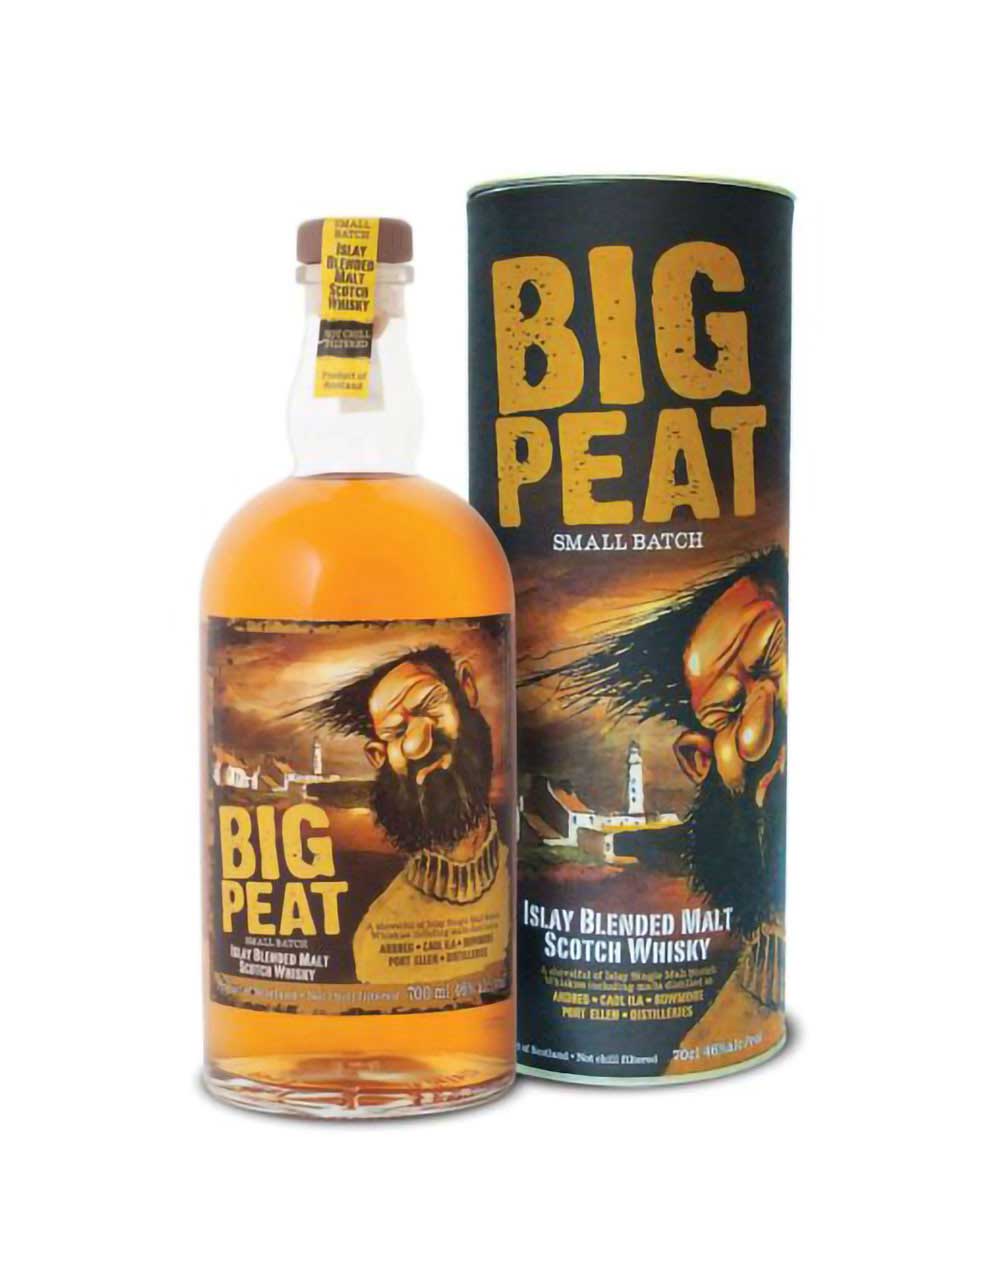 The Big Peat Small Batch Islay Scotch Whisky